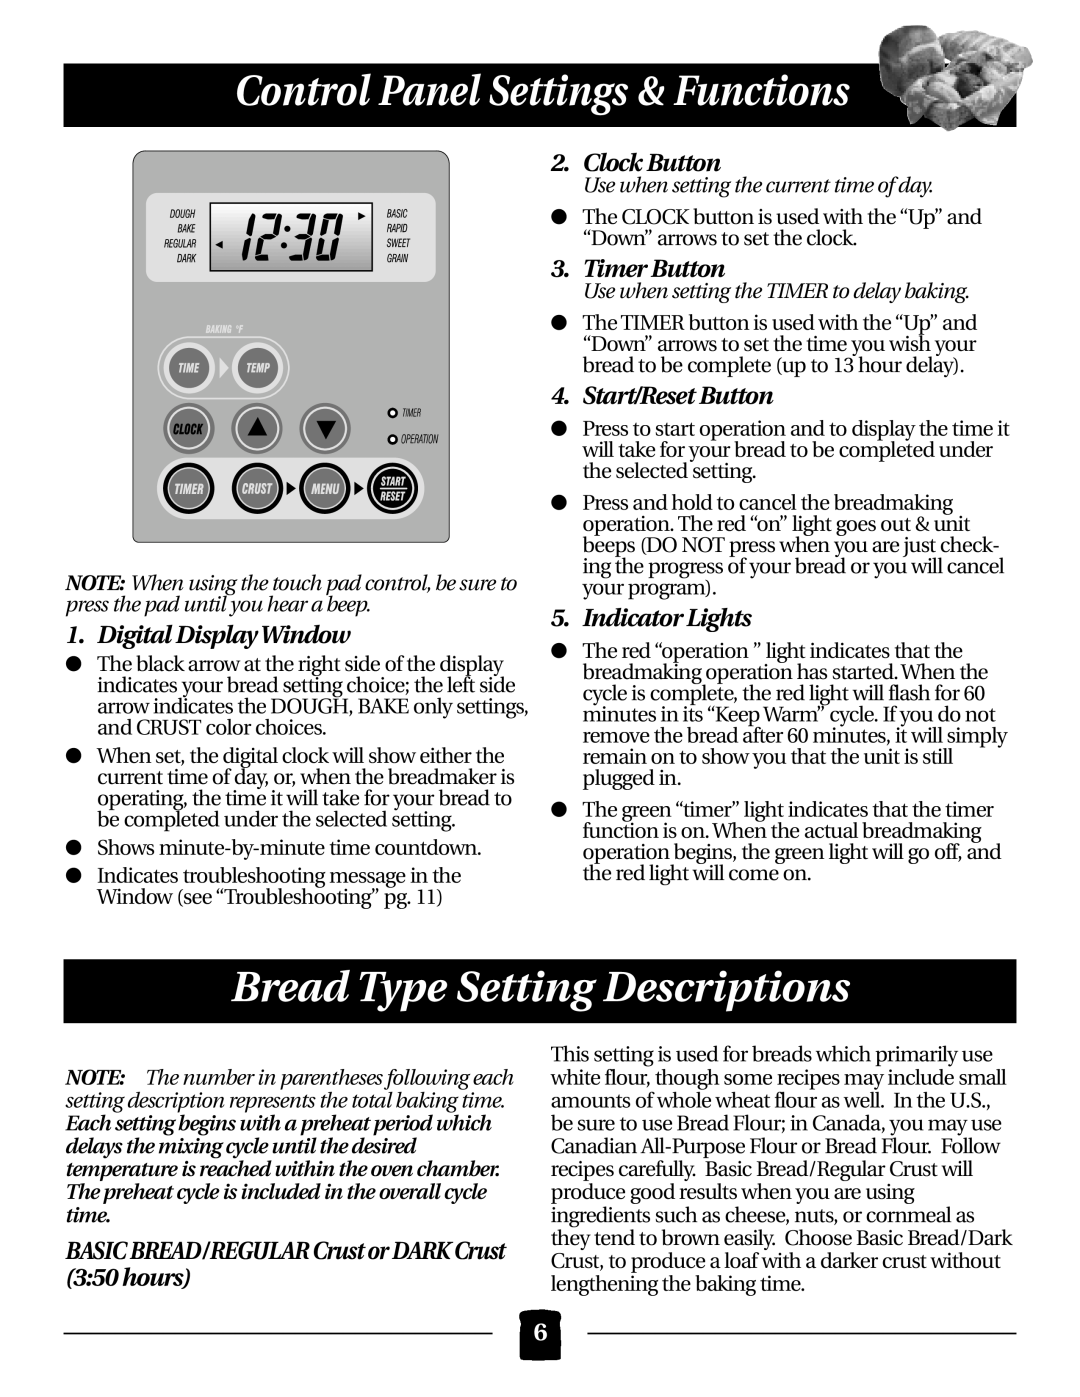 Black & Decker B2000 Control Panel Settings & Functions, Bread Type Setting Descriptions, Clock Button, Timer Button 